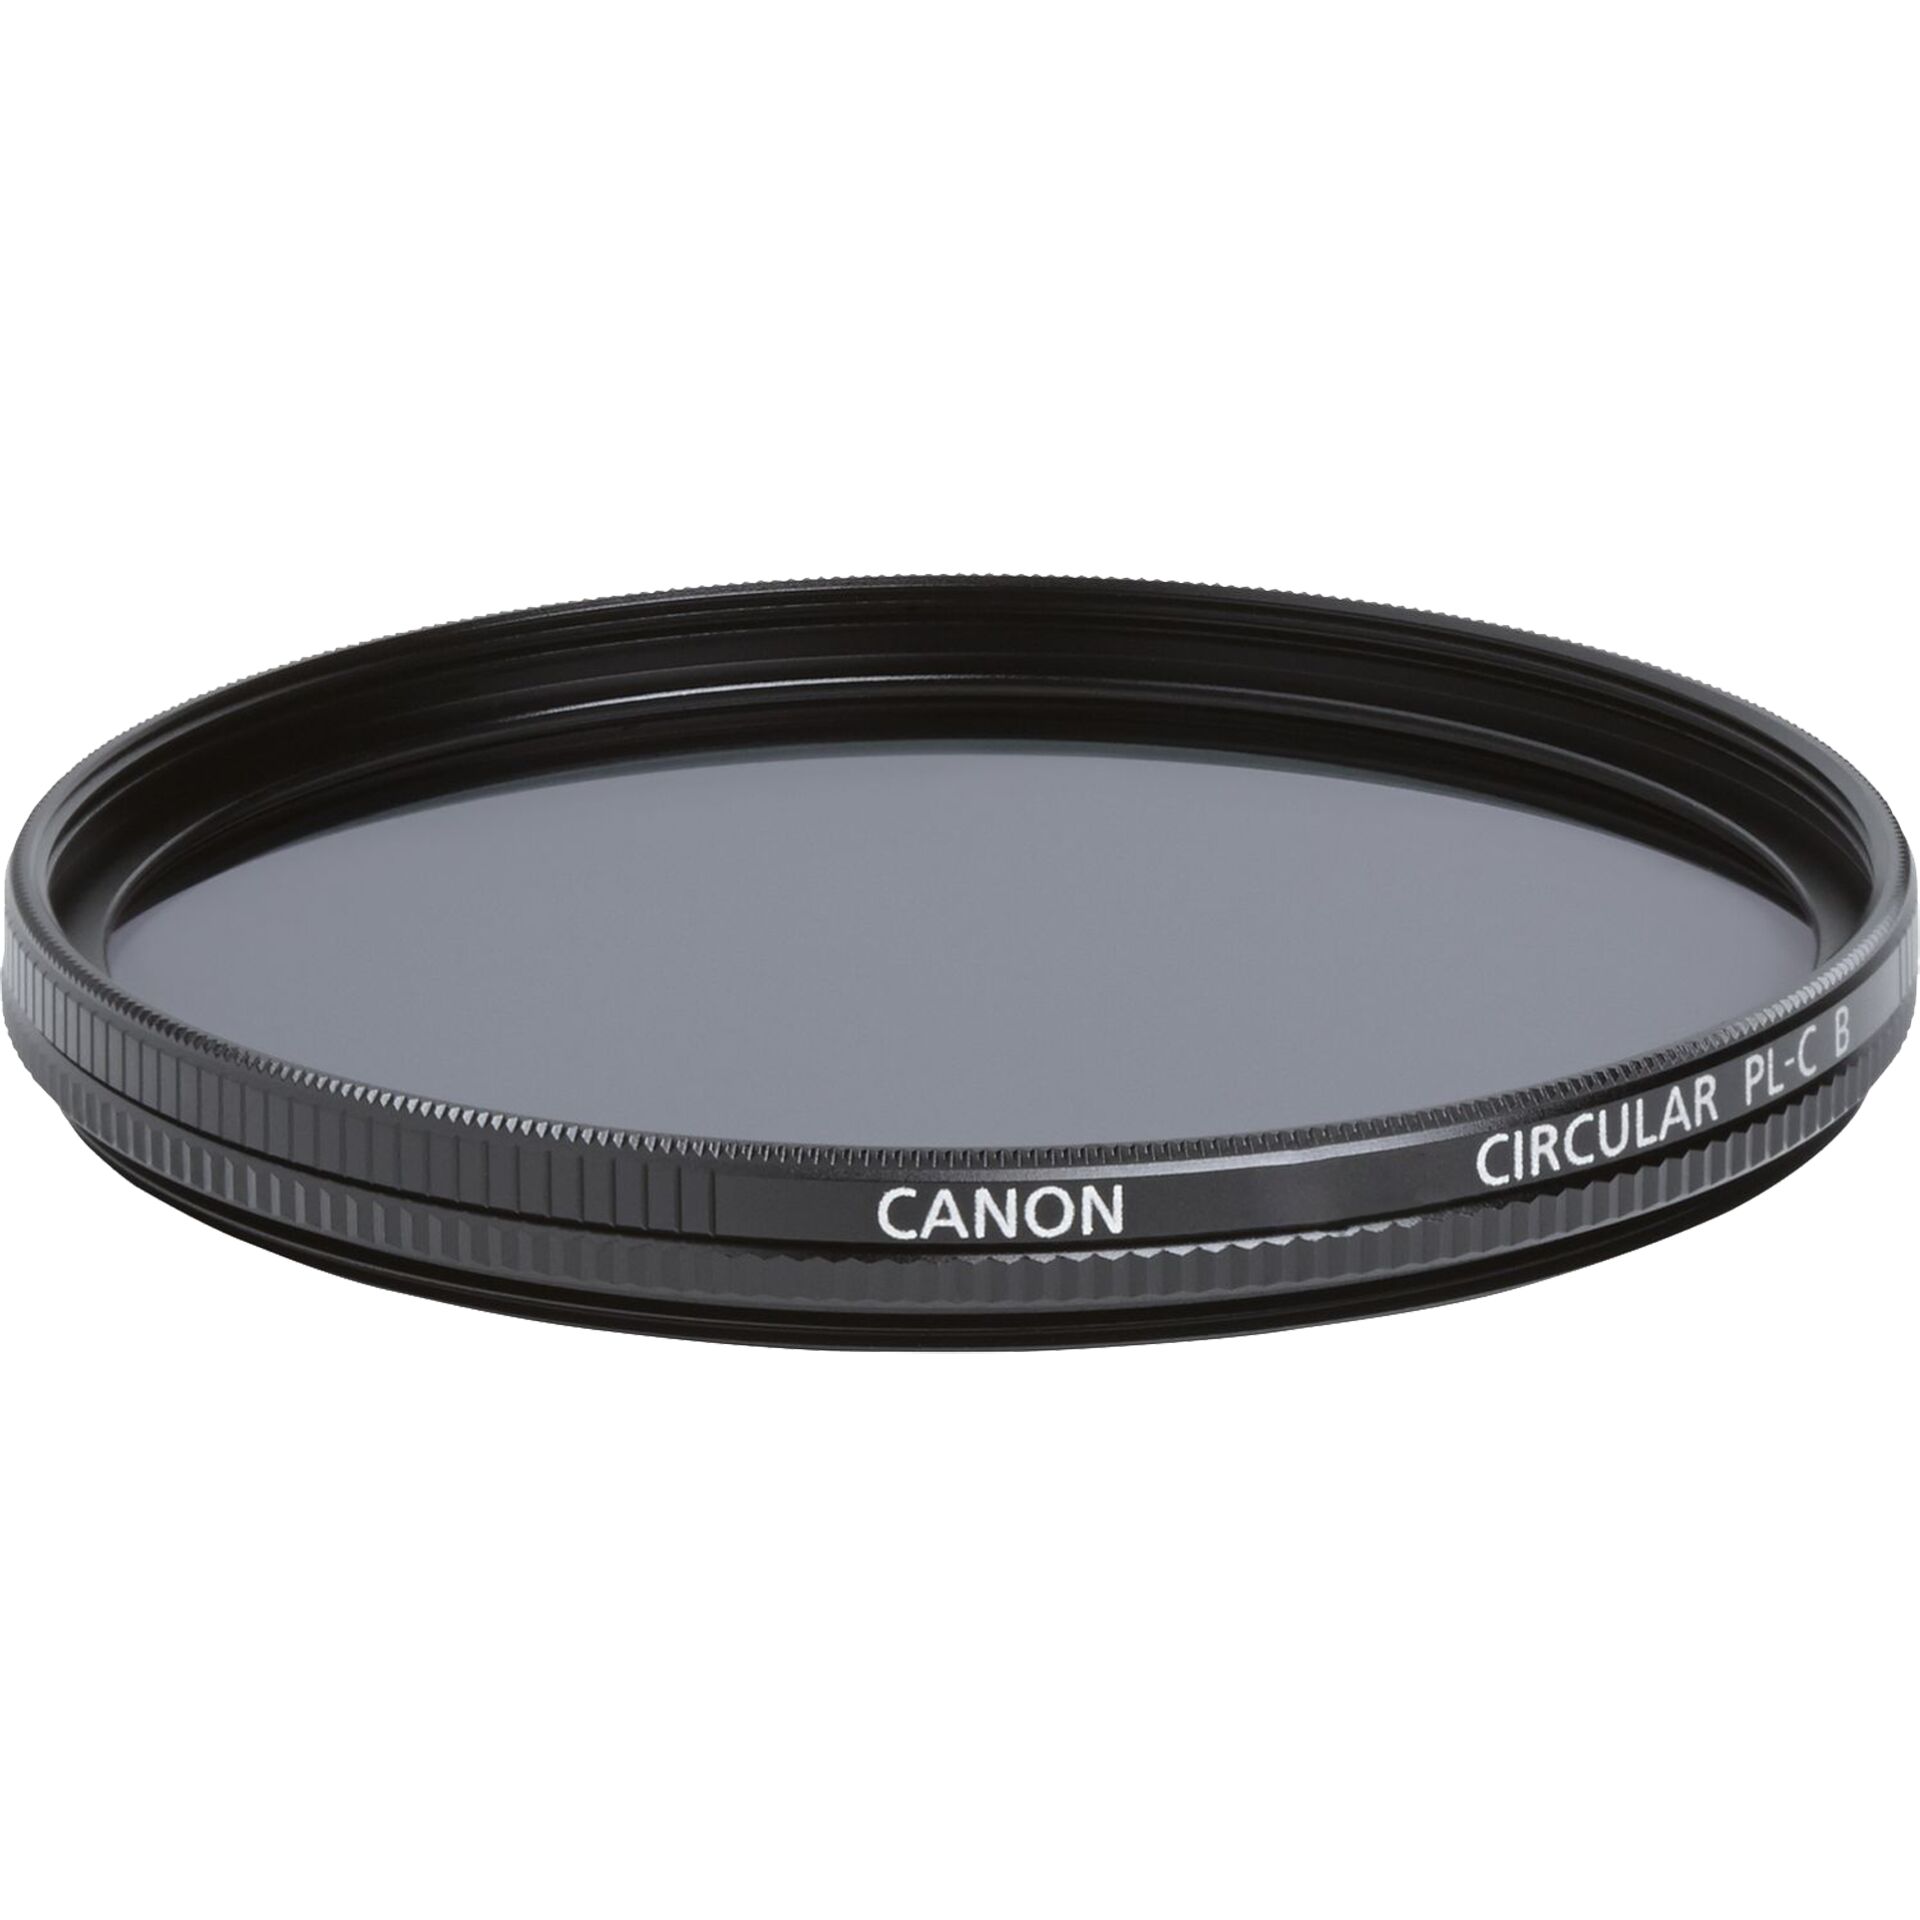 Canon PL-C B Filter 52